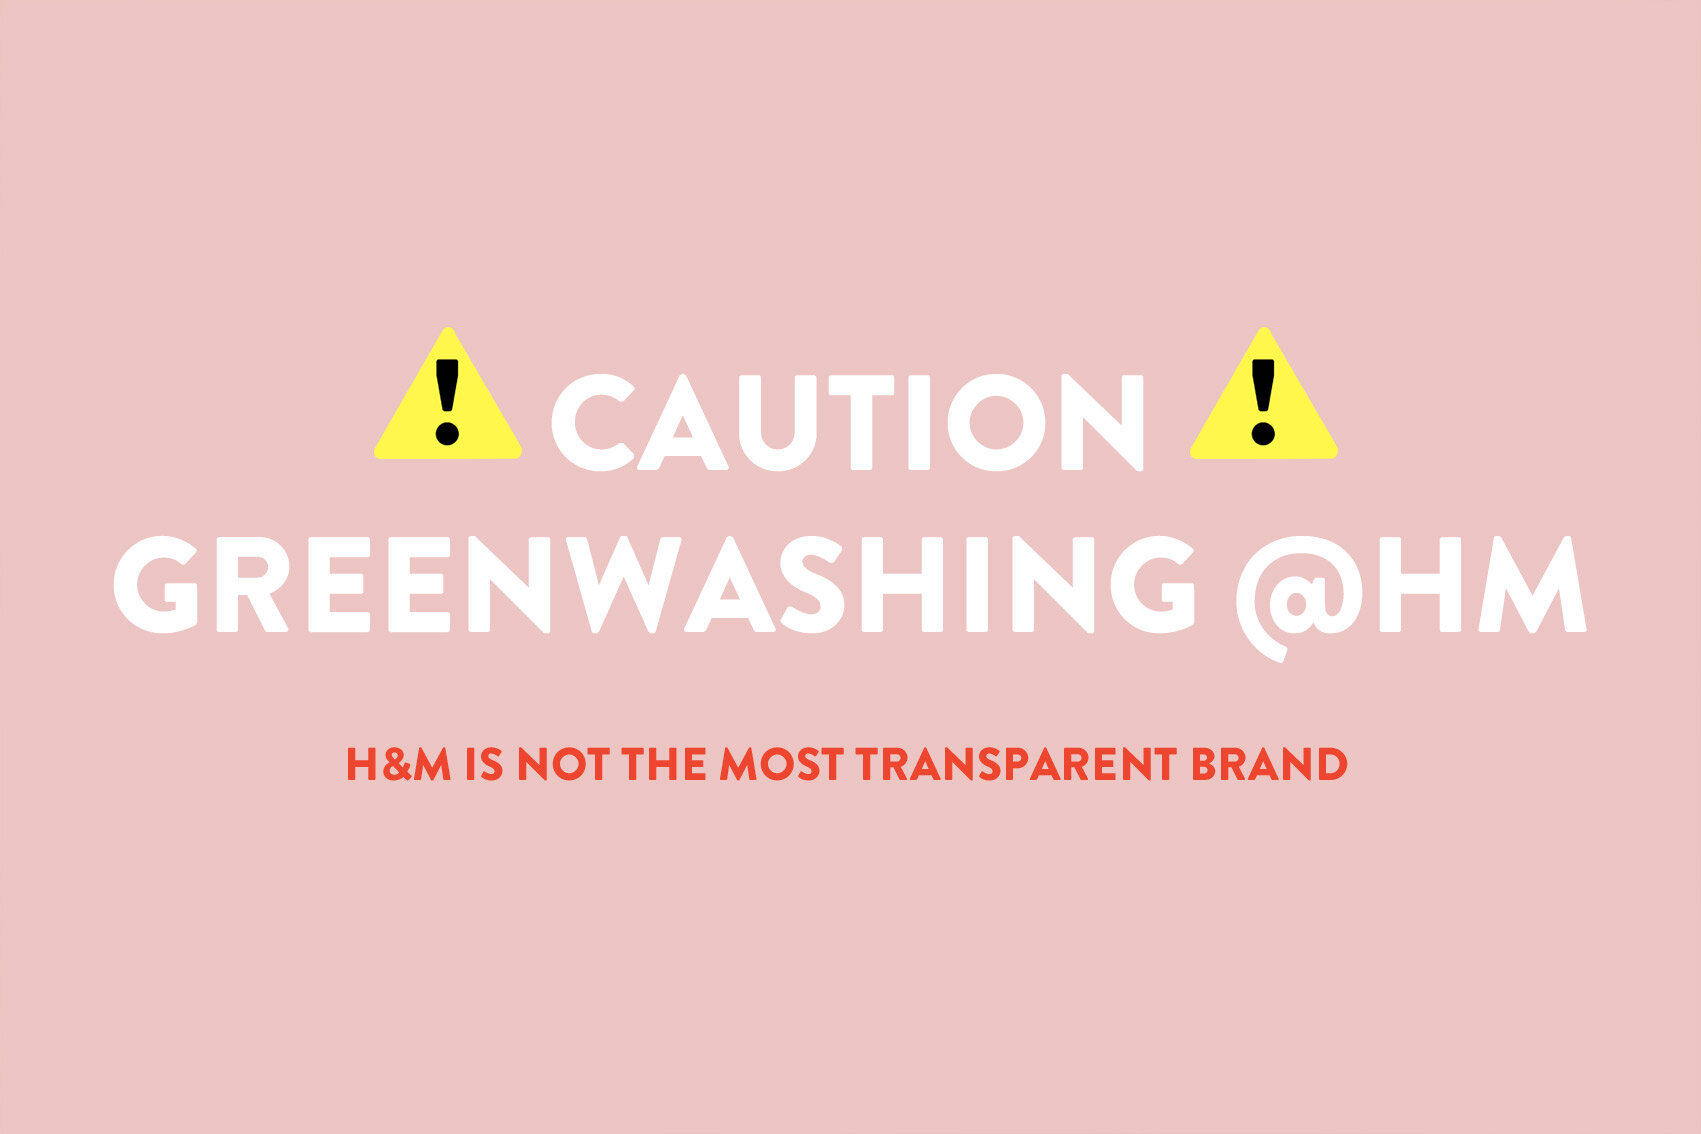 hm-greenwashion-transparency-index.jpg